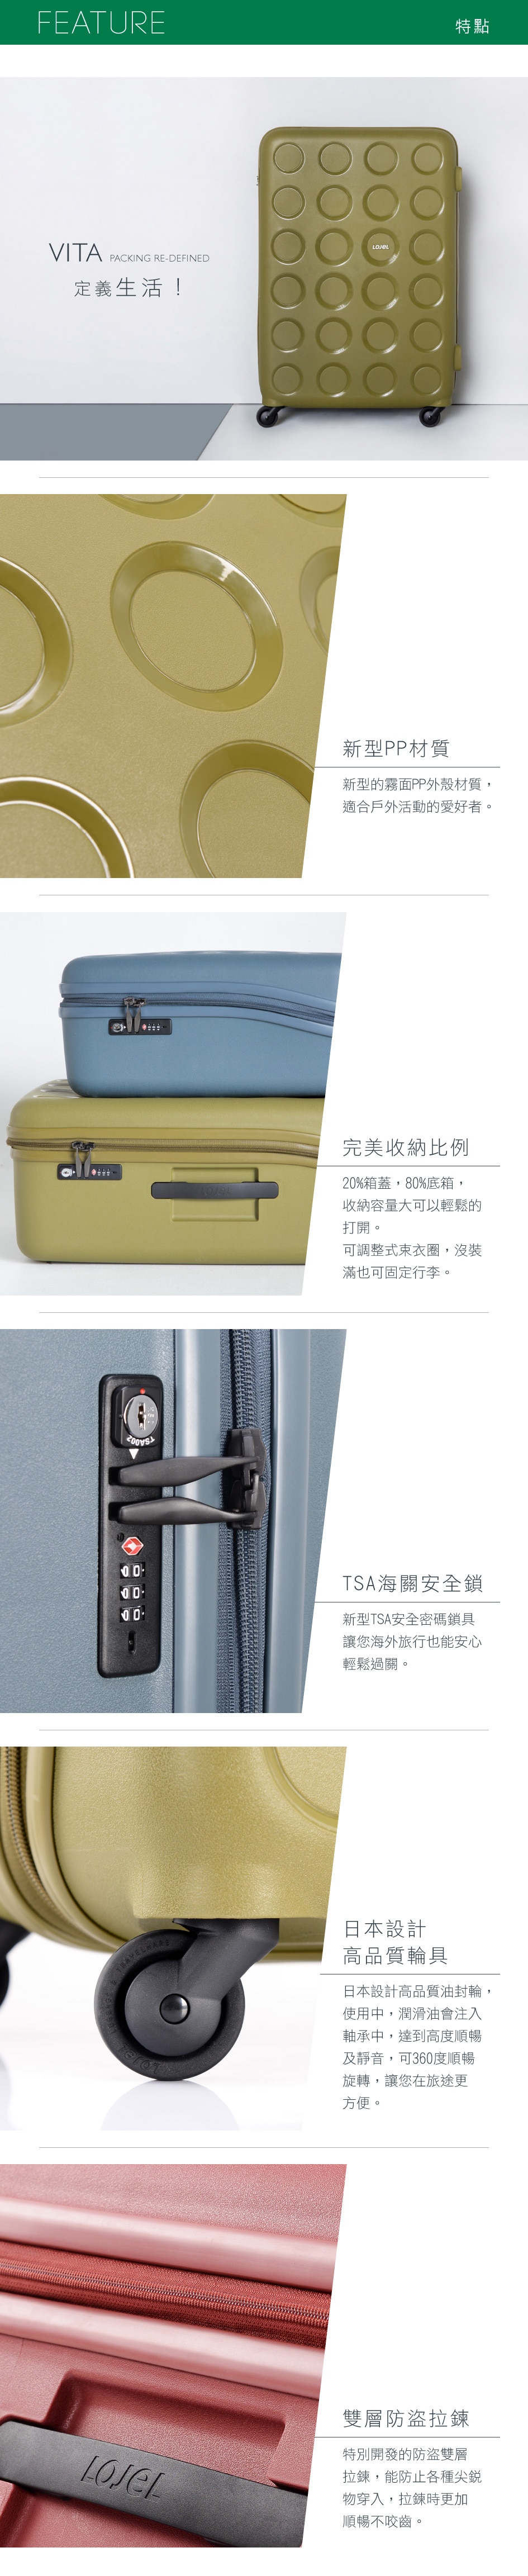 Lojel Vita 硬殼拉鏈行李箱 32 吋具有20%箱蓋、80%箱底，收納容量大，附TSA海關鎖、可調整式束衣圈，行李箱沒裝滿也可固定和360度旋轉四輪。